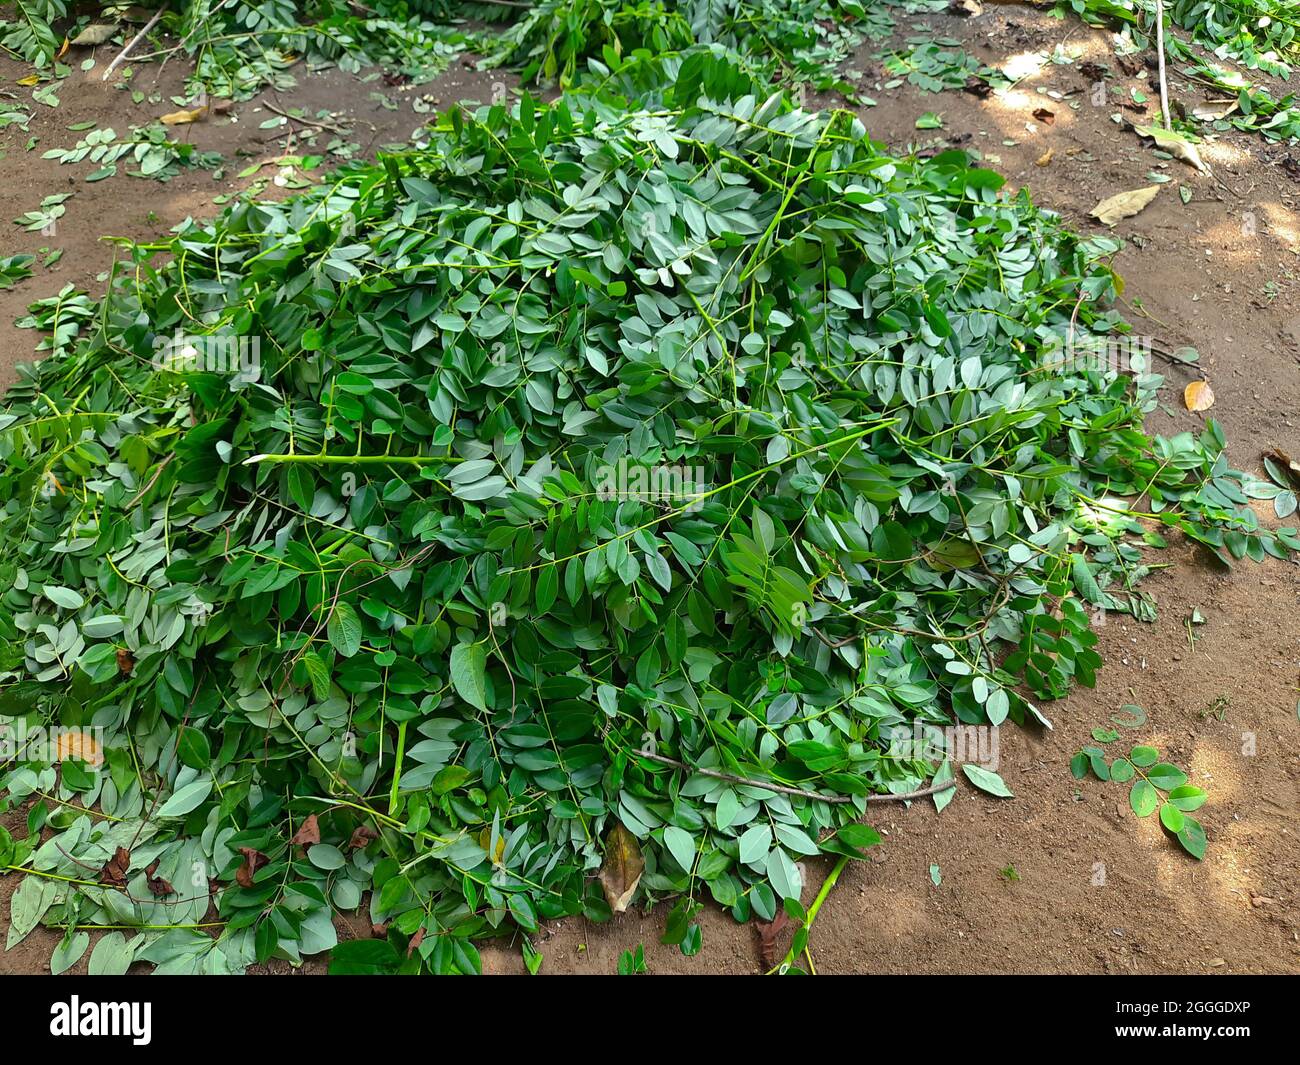 Gliricidia sepium levaes are pile up in the ground Stock Photo